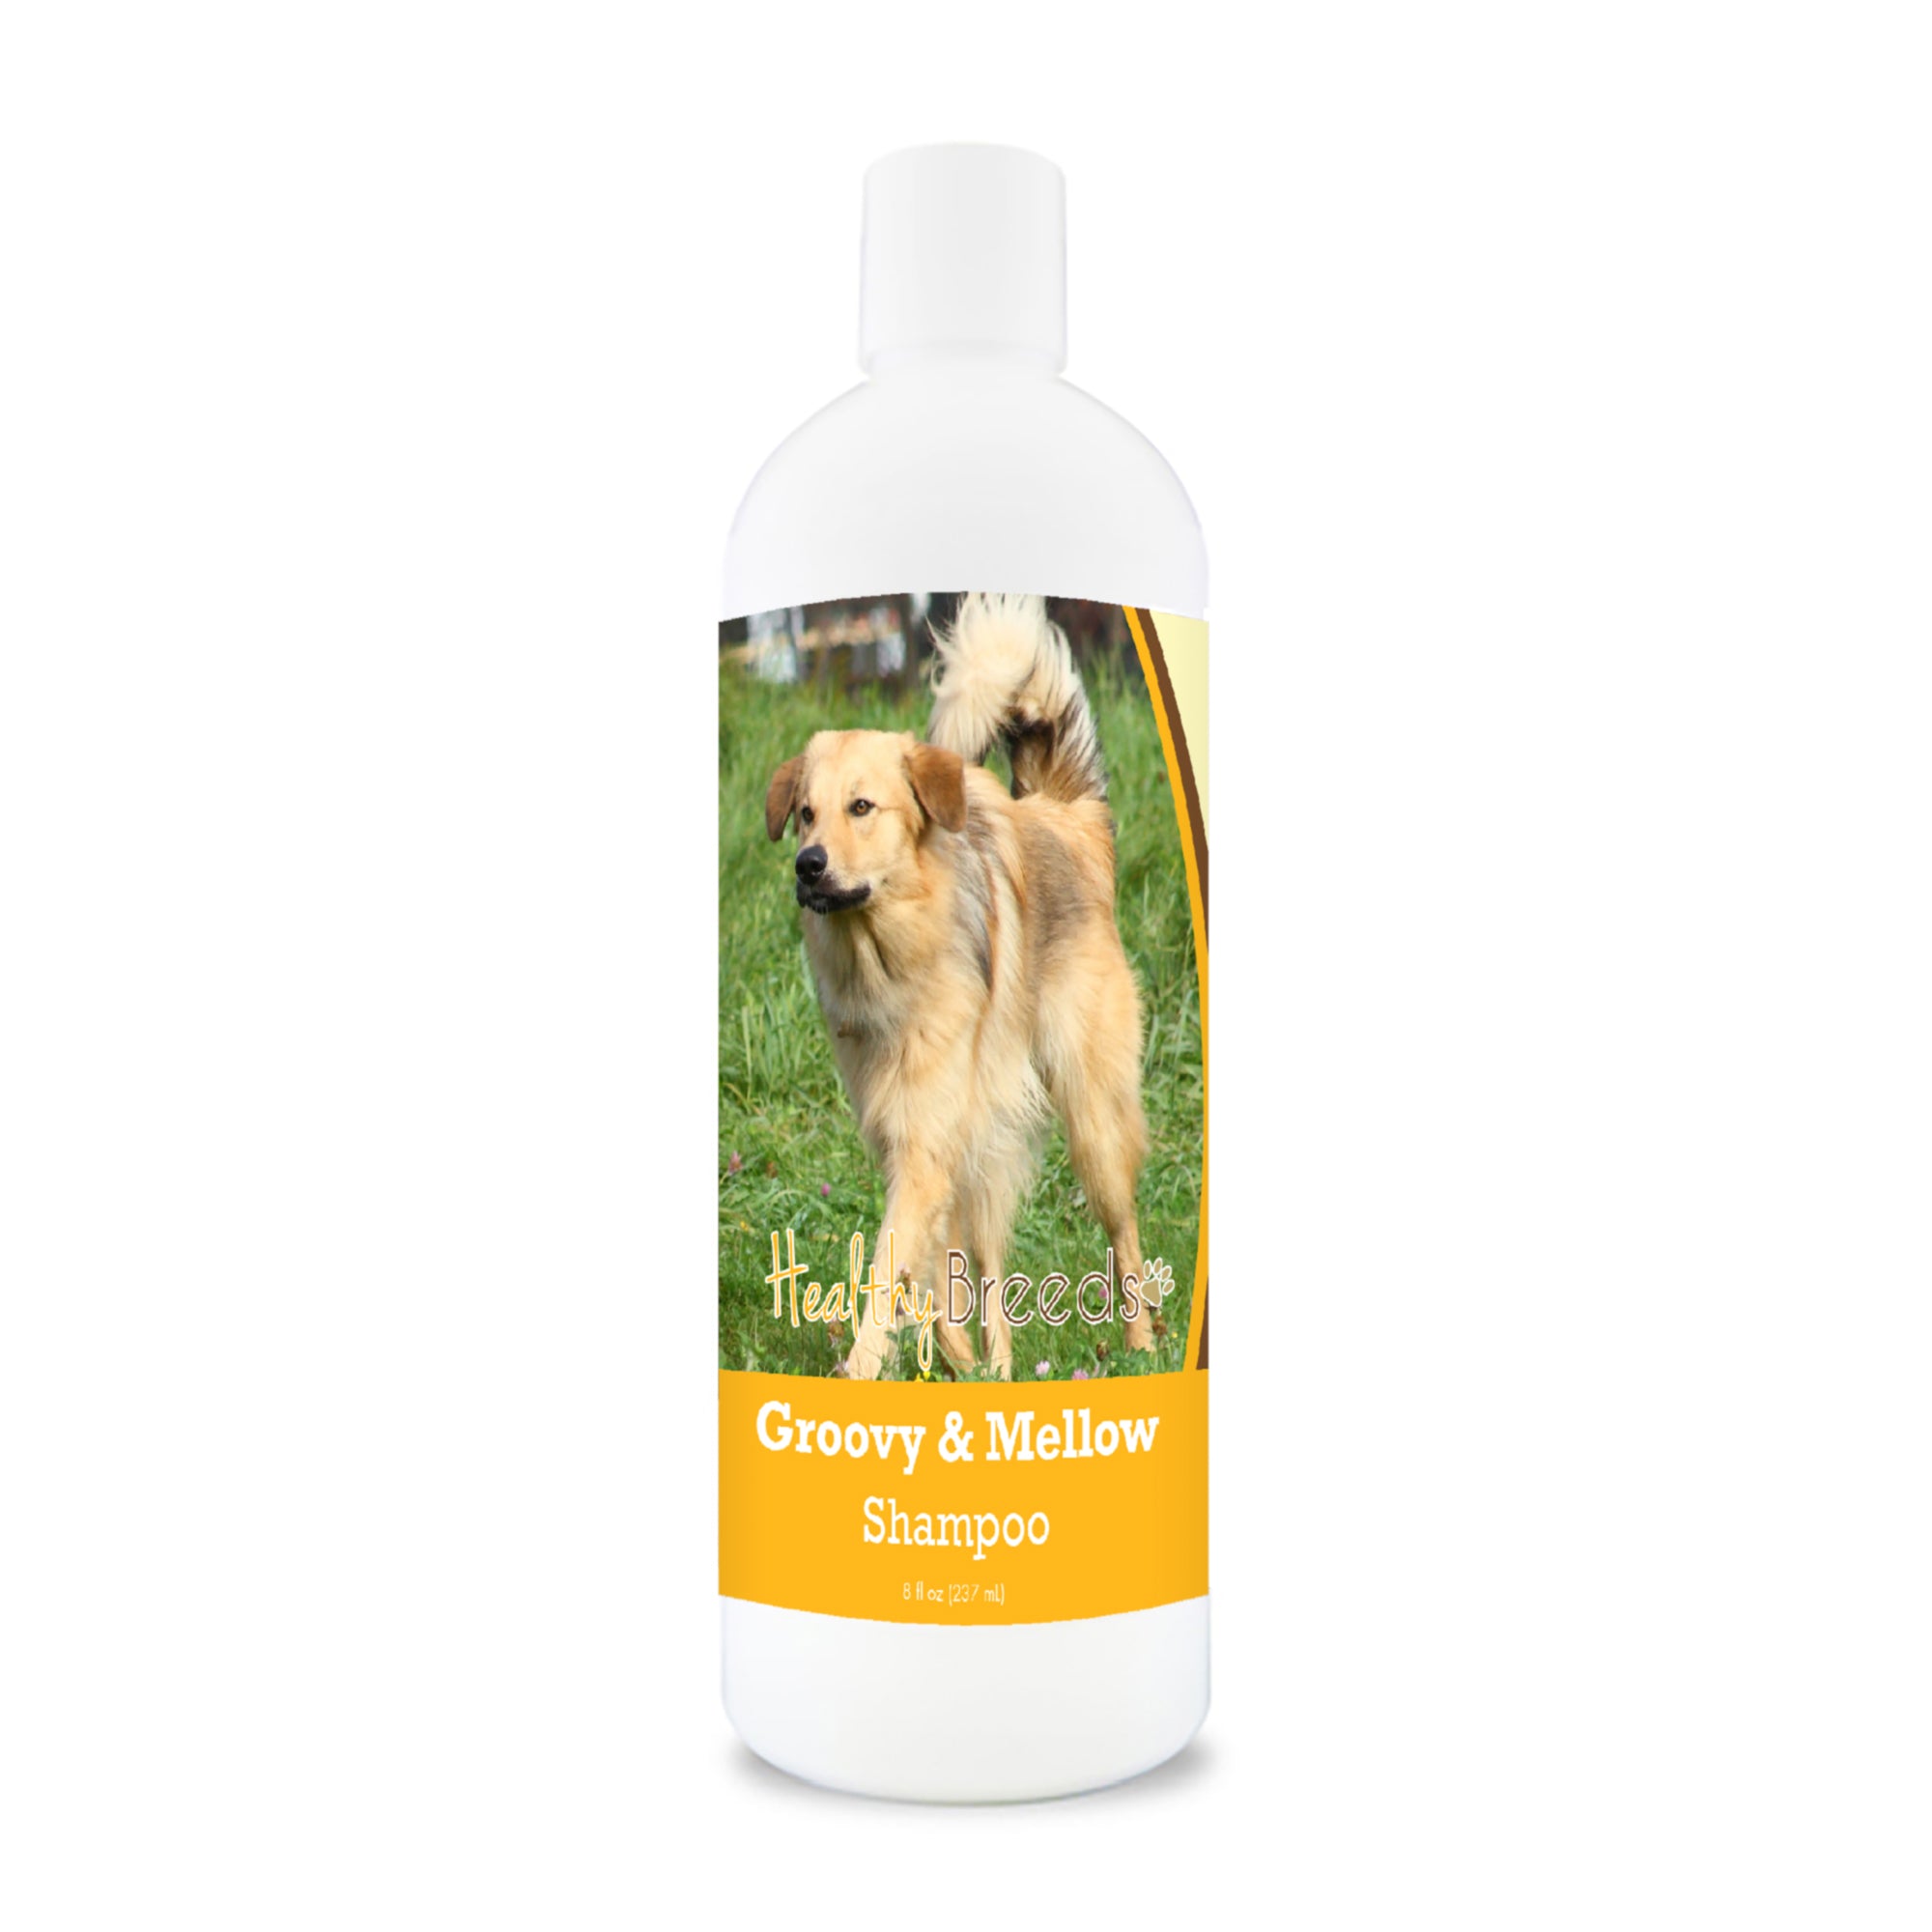 Chinook Groovy & Mellow Shampoo 8 oz